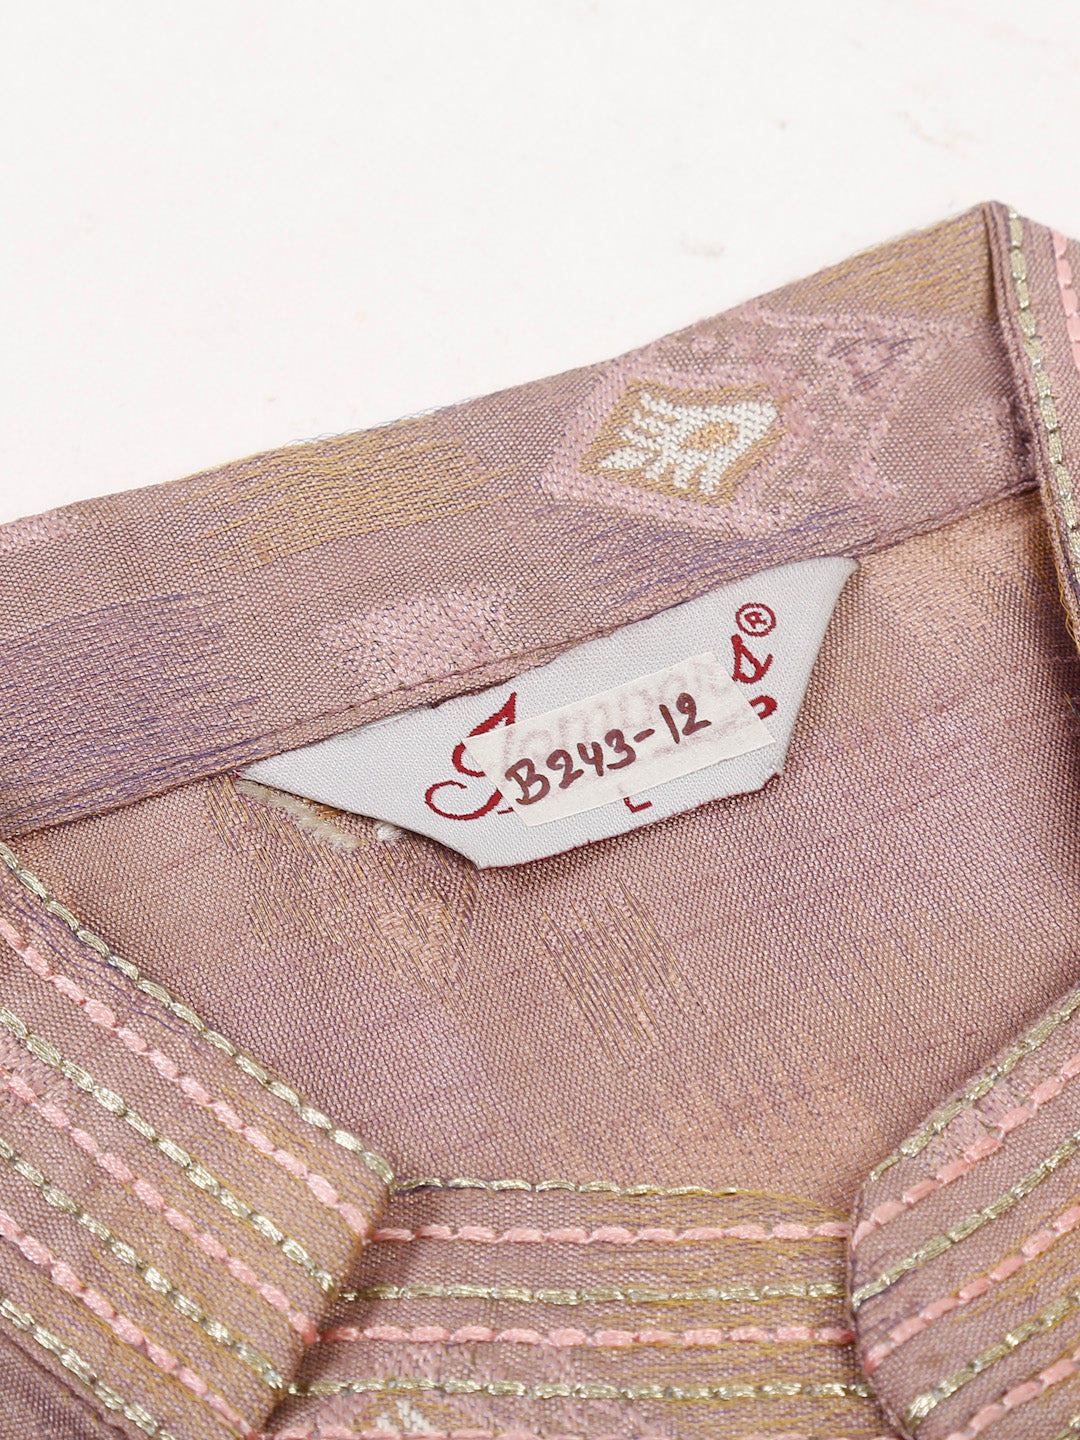 Jompers Men's Pink Collar Embroidered Woven Design Kurta Pajama